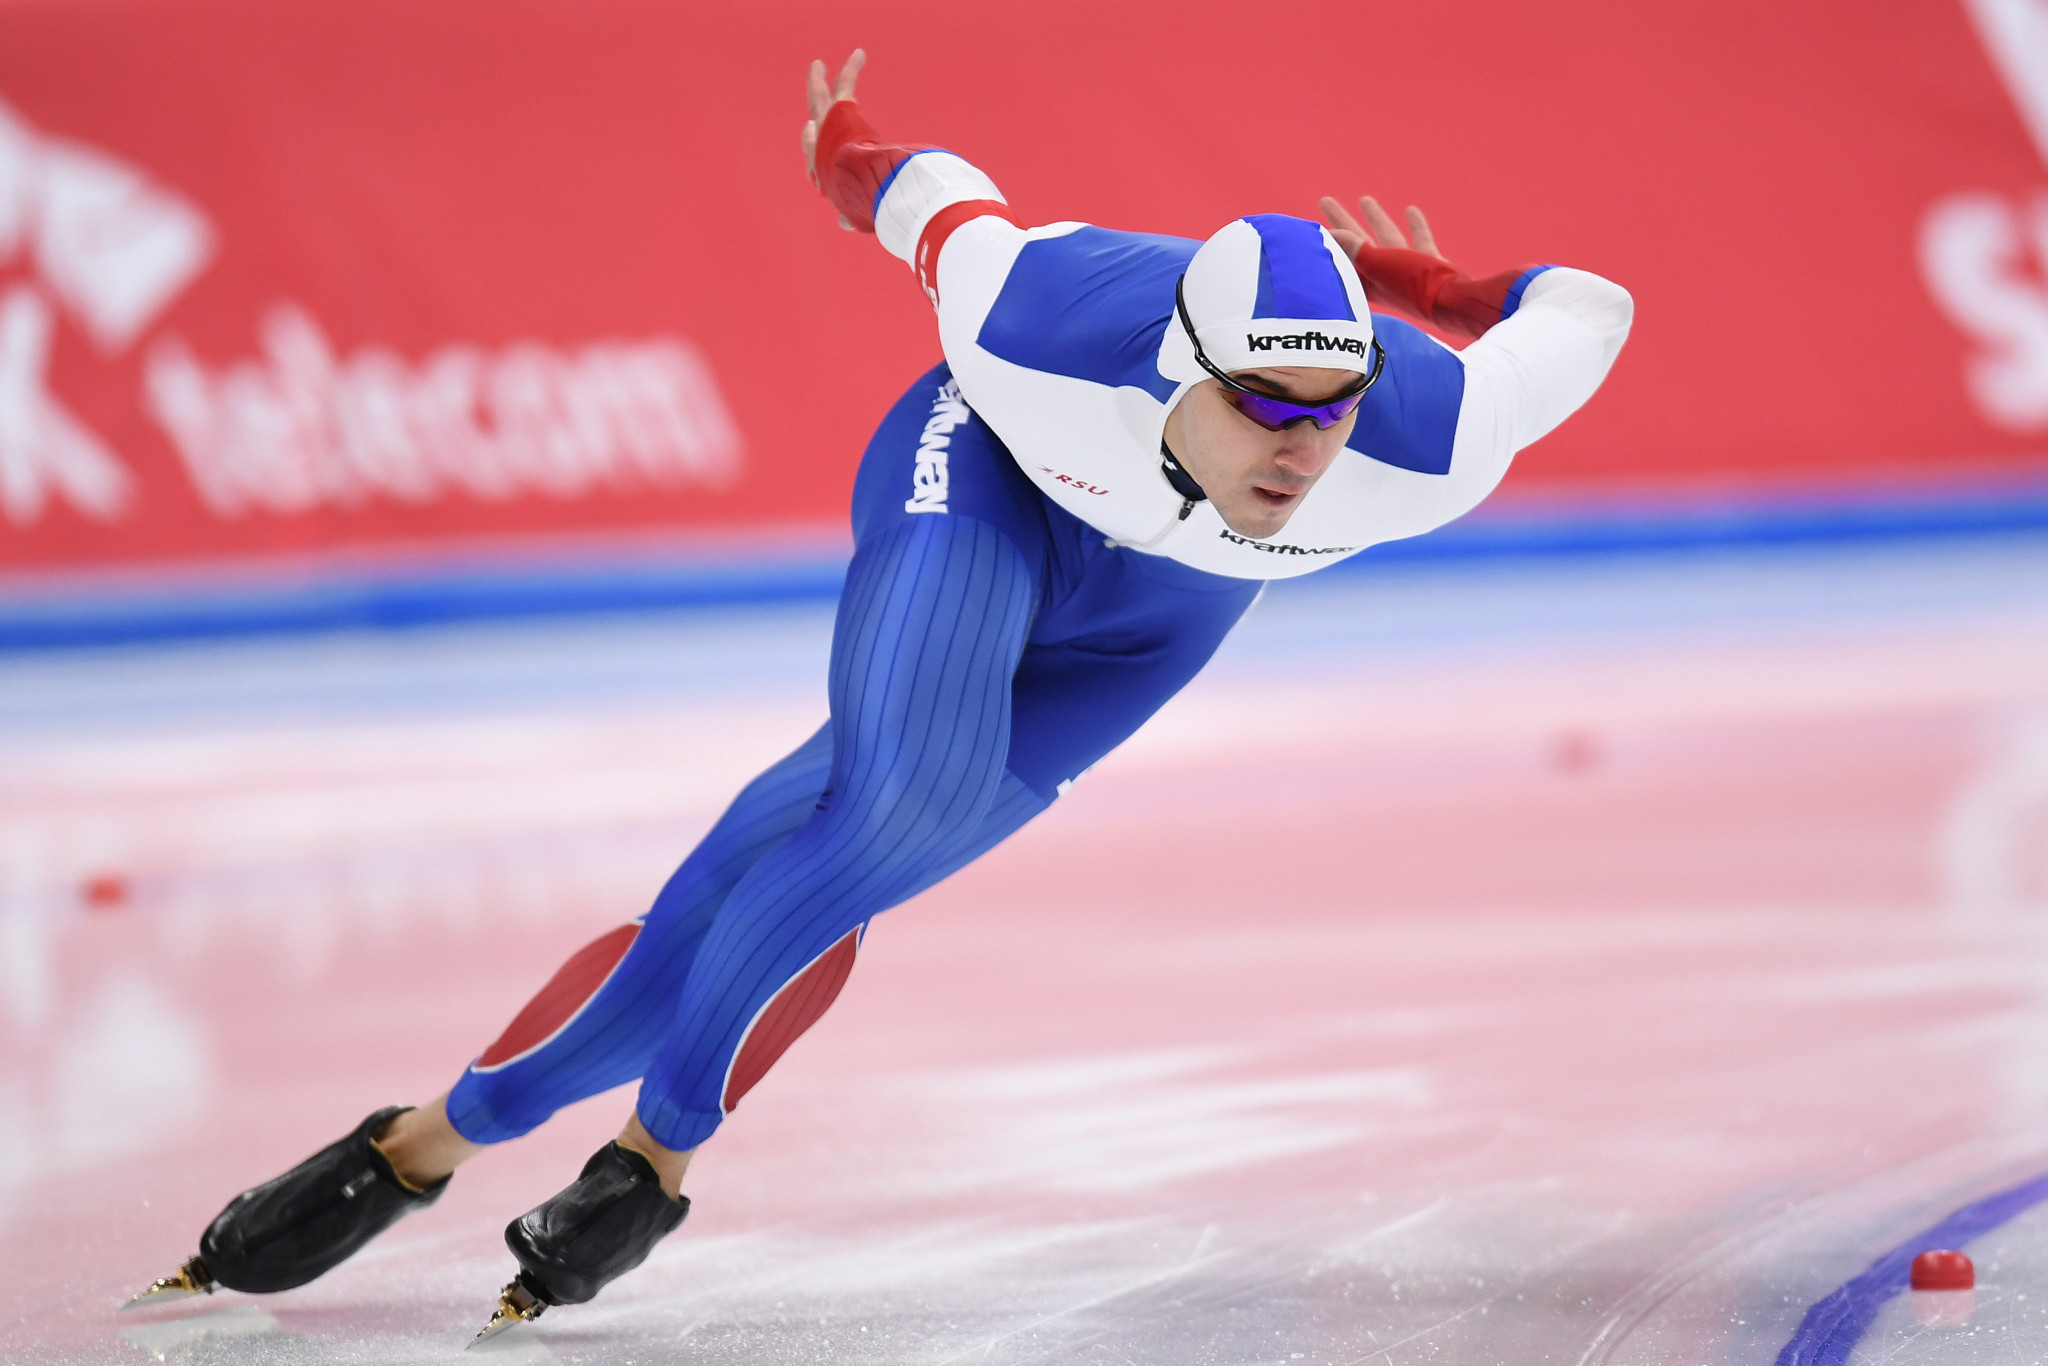 Murashov earns 500m victory at ISU Speed Skating World Cup in Calgary